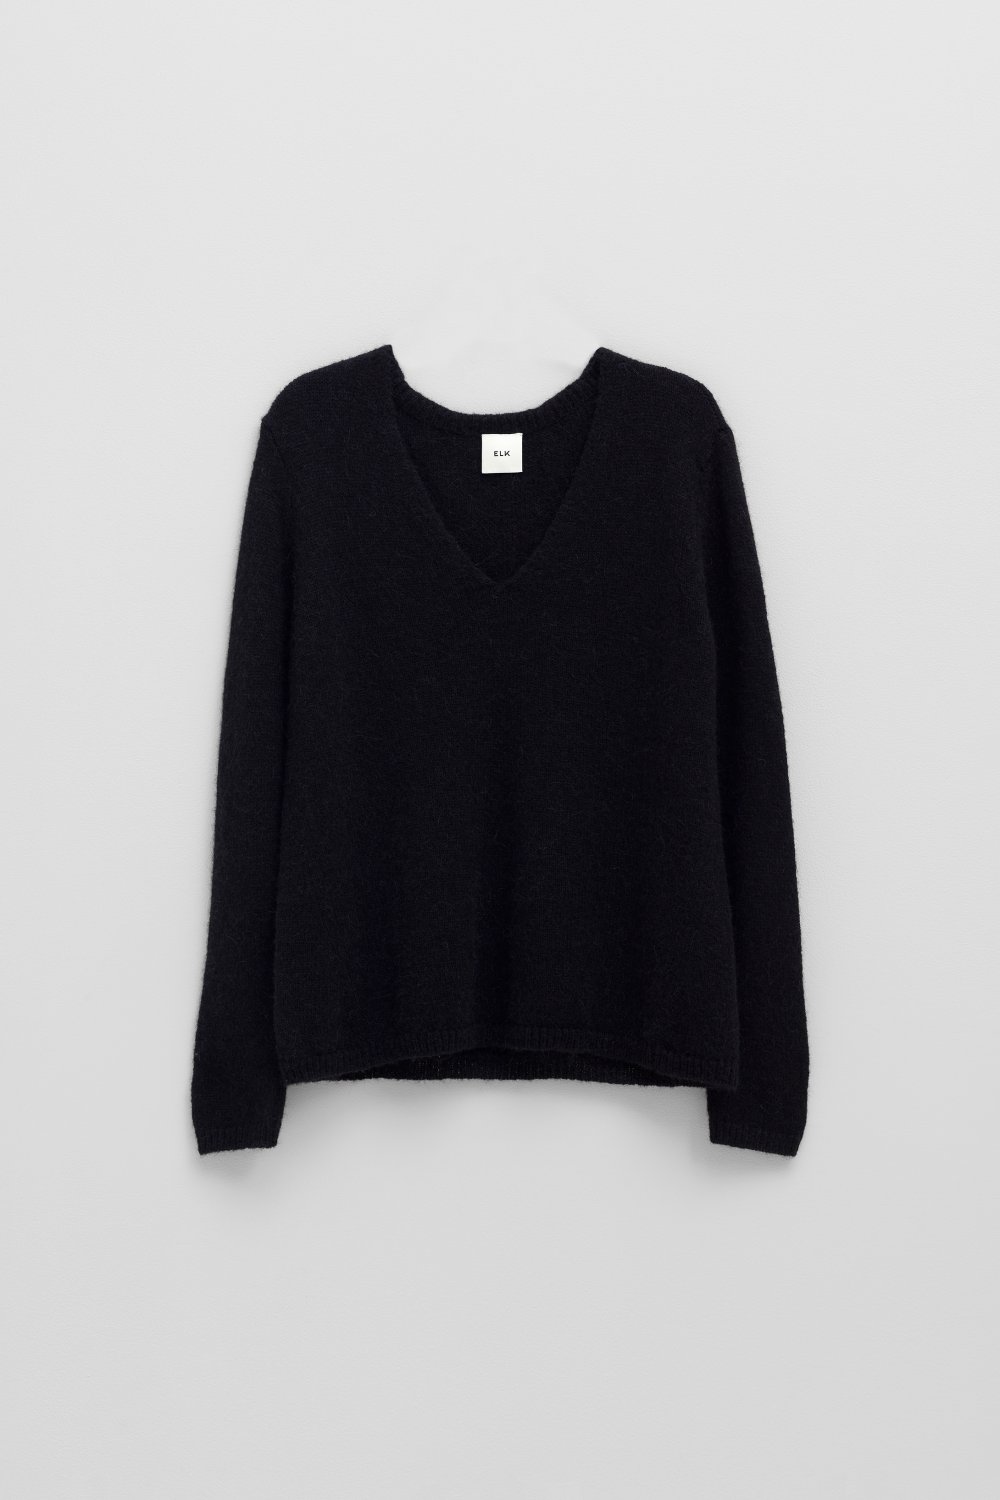 elk-len-sweater-black 5